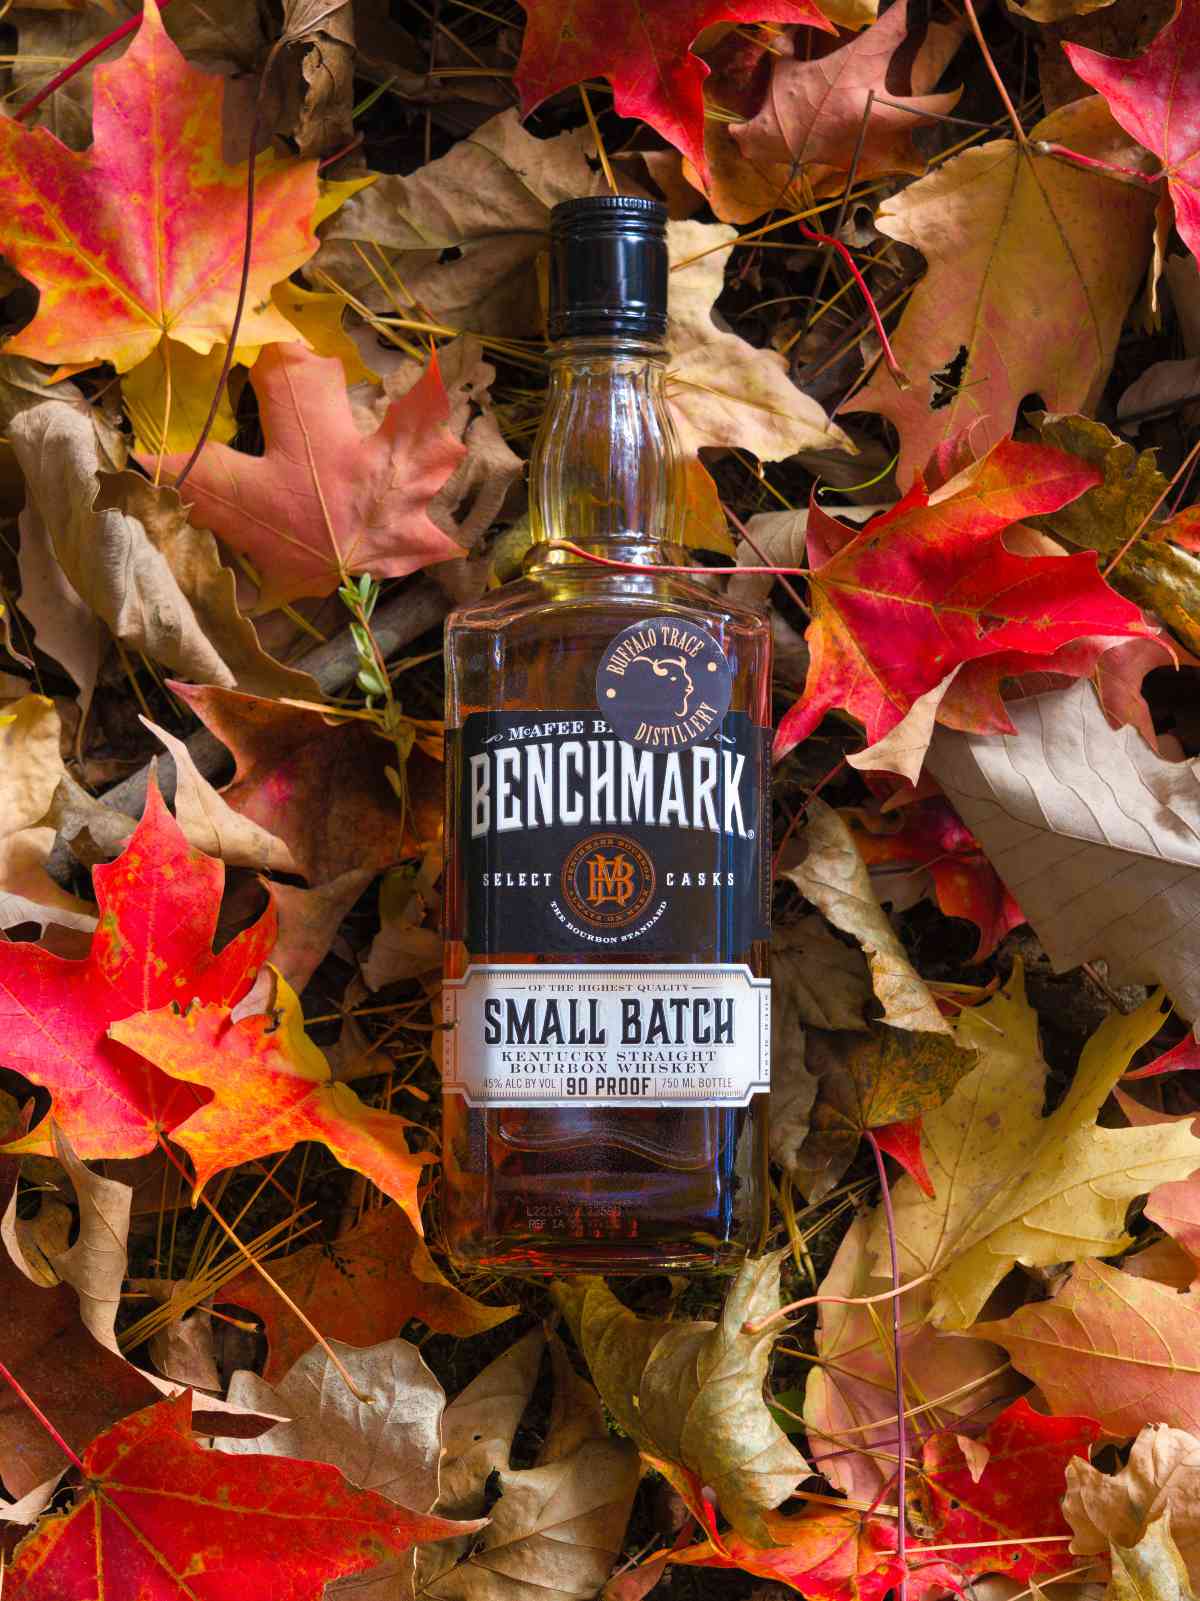 Benchmark Small Batch Bourbon featured